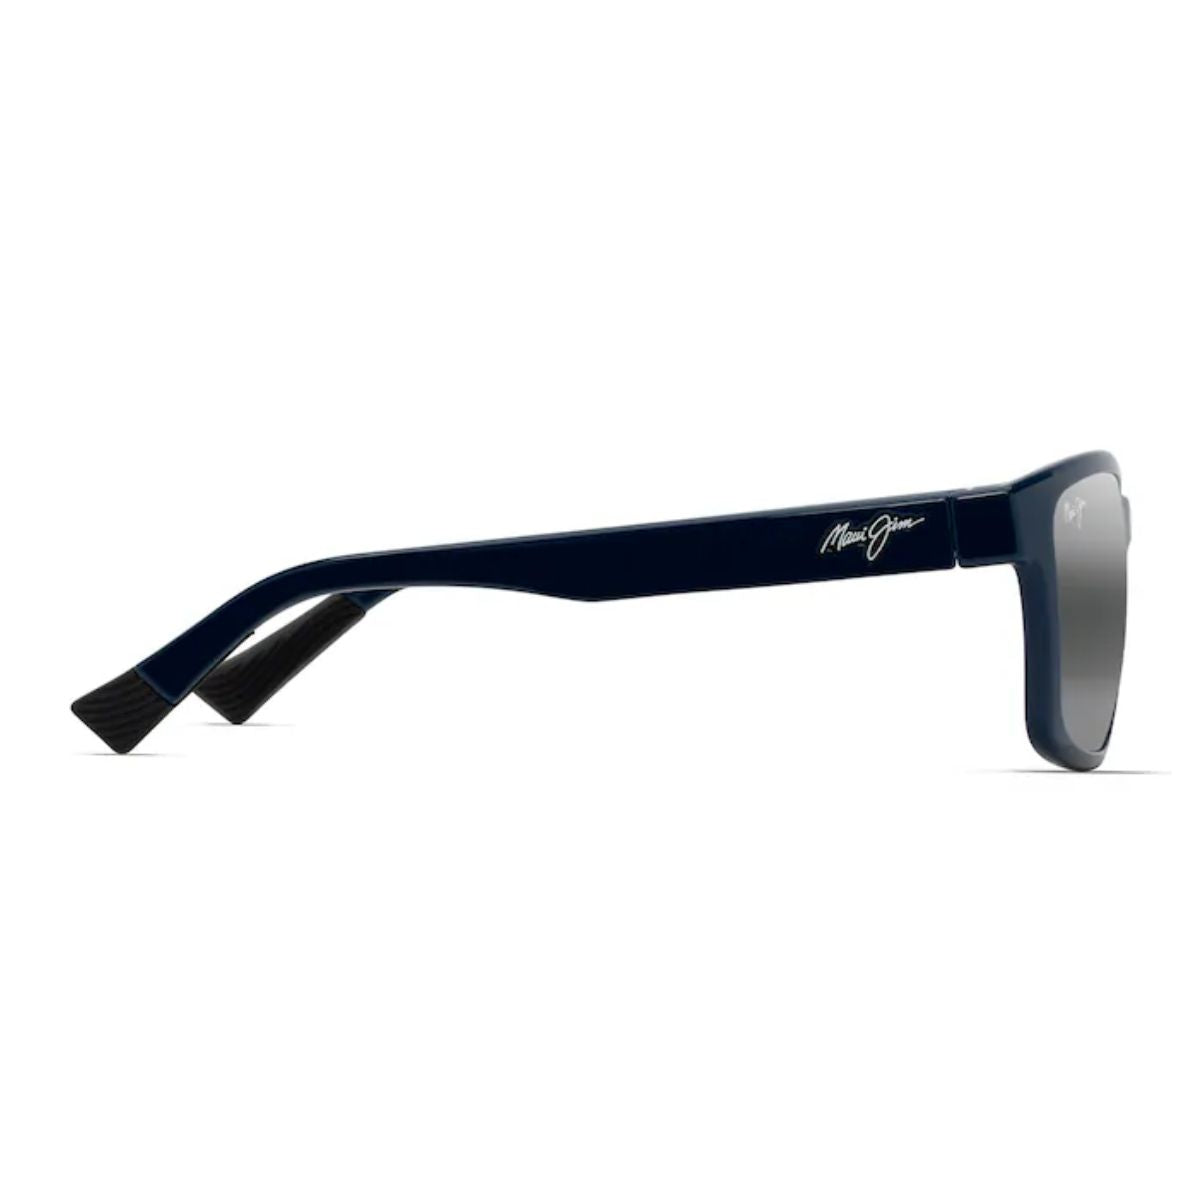 "Shop Trending Maui Jim Lehiwa Navy Blue Color Square Shape Sunglasses For Men's At Optorium Online Store | Offer Cooling Glasses For Men's"